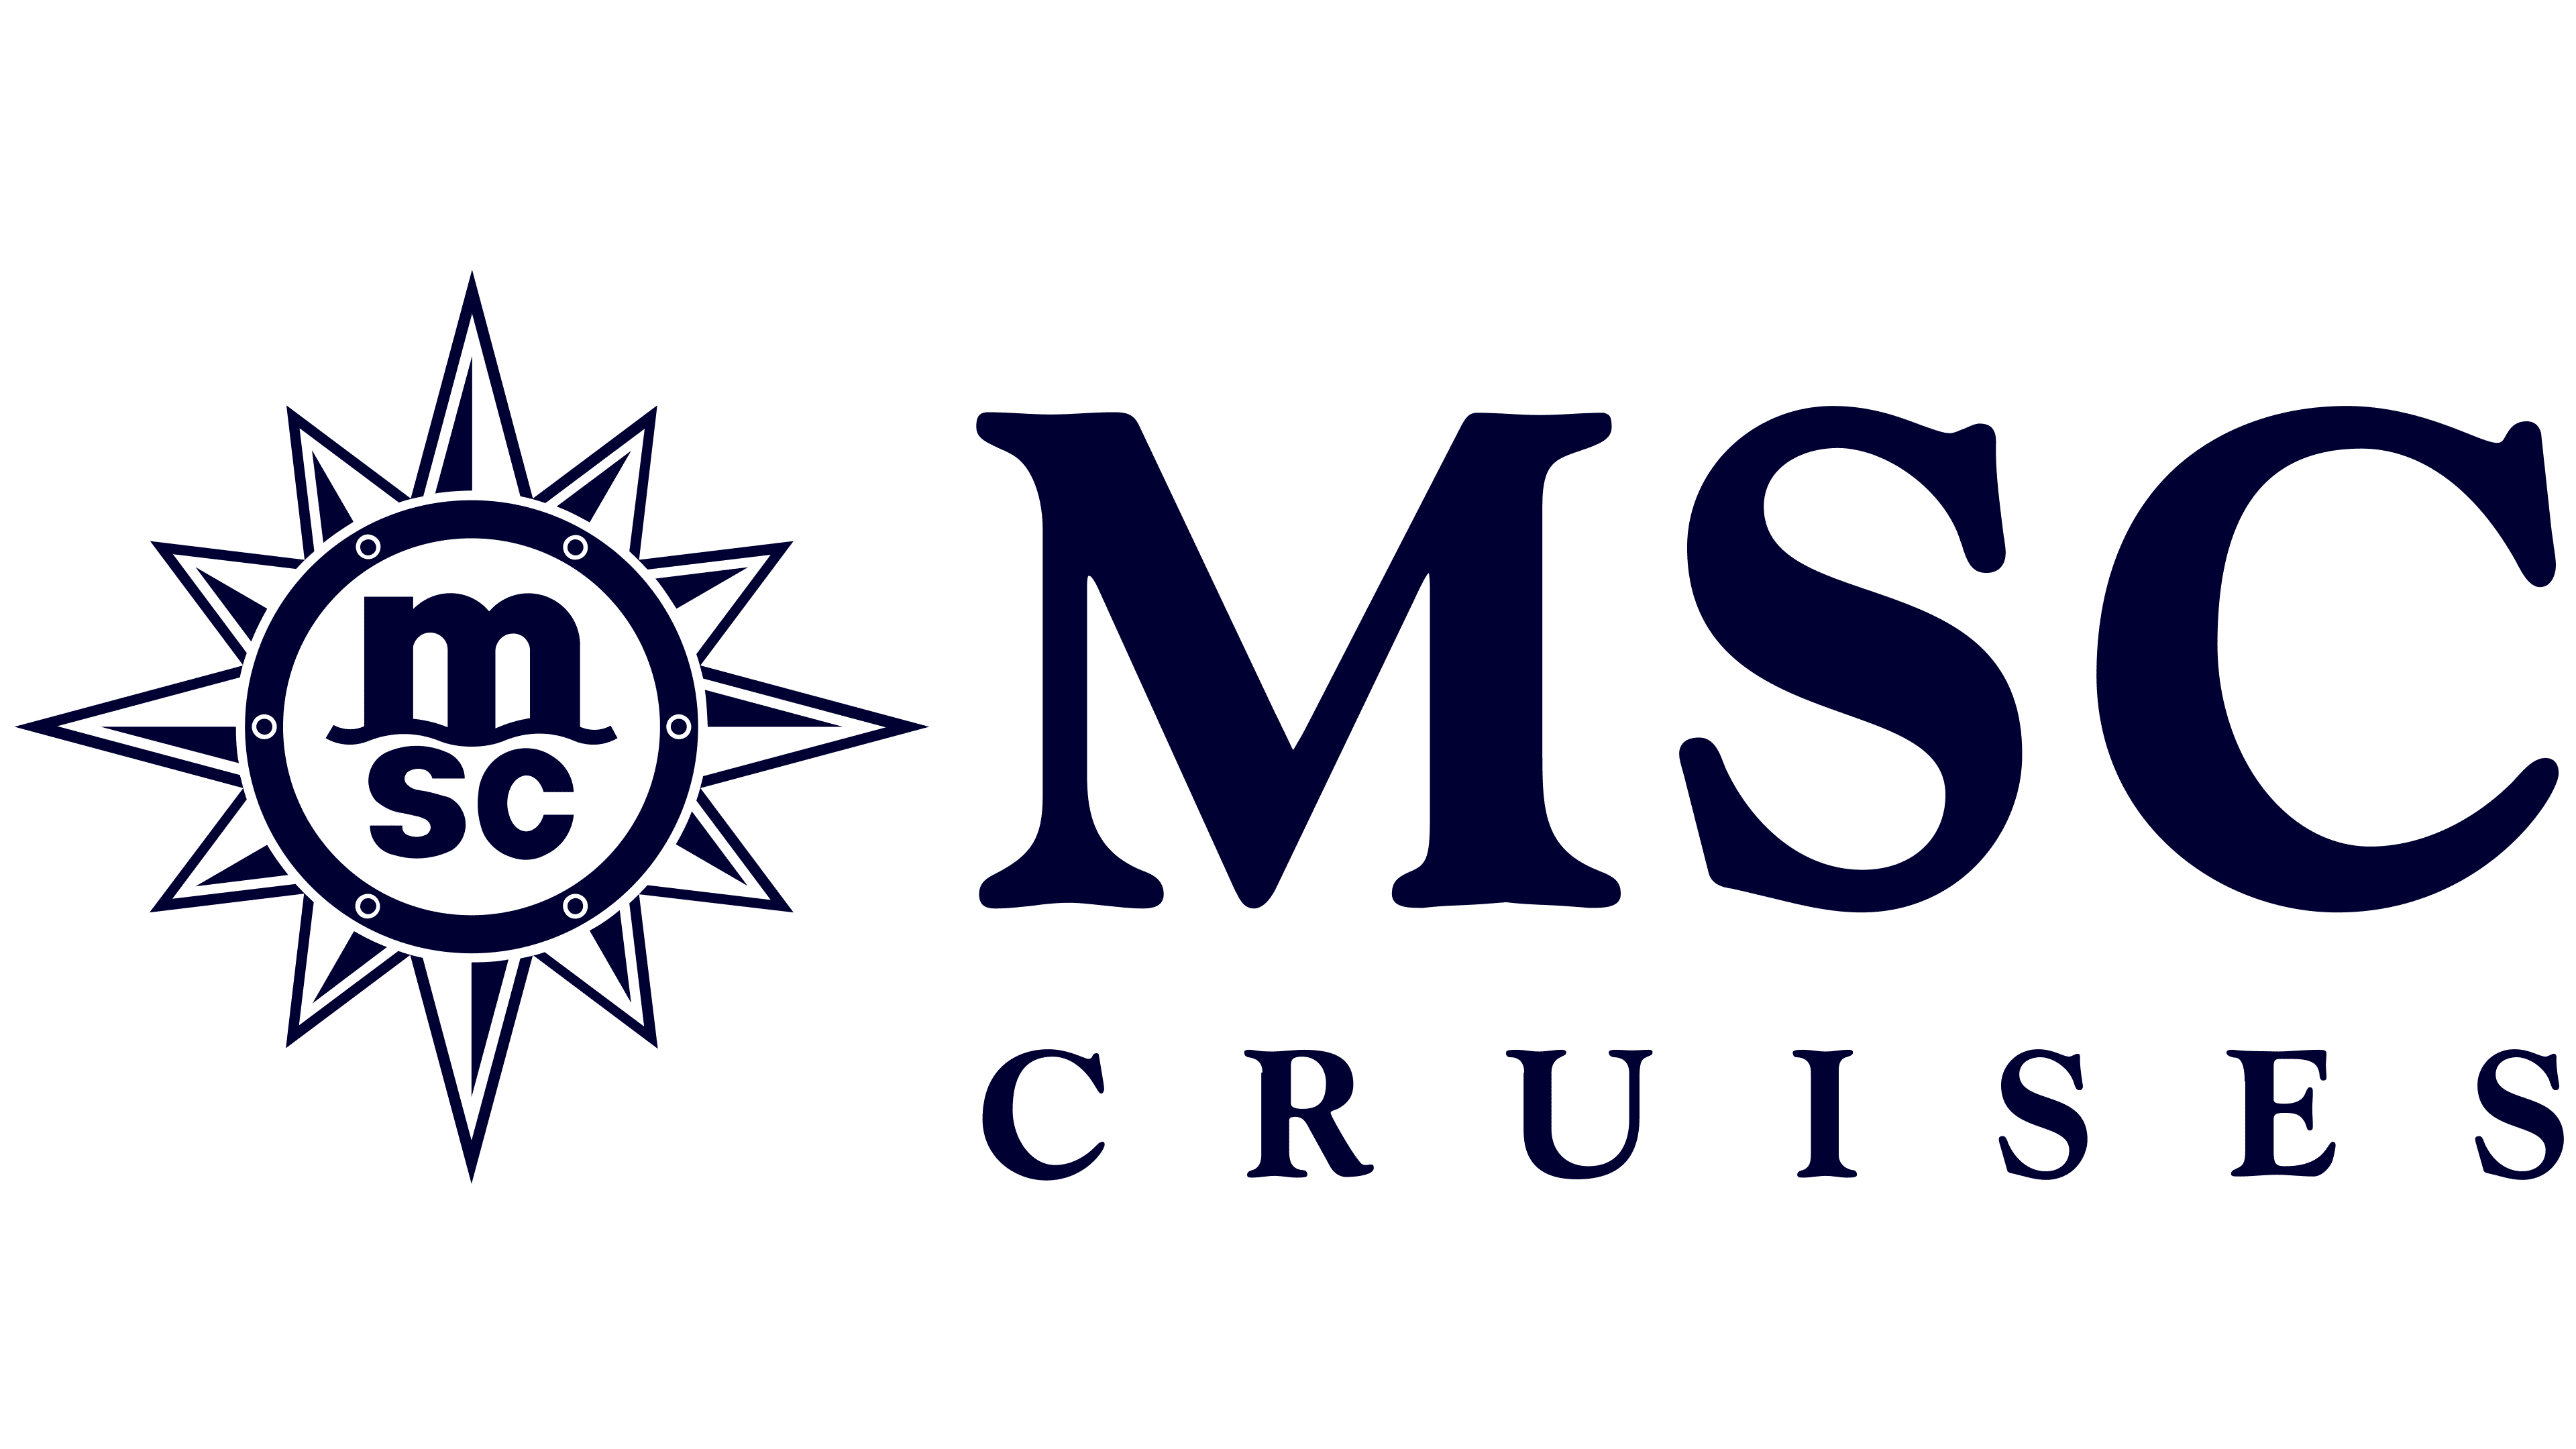 cruise company modesto